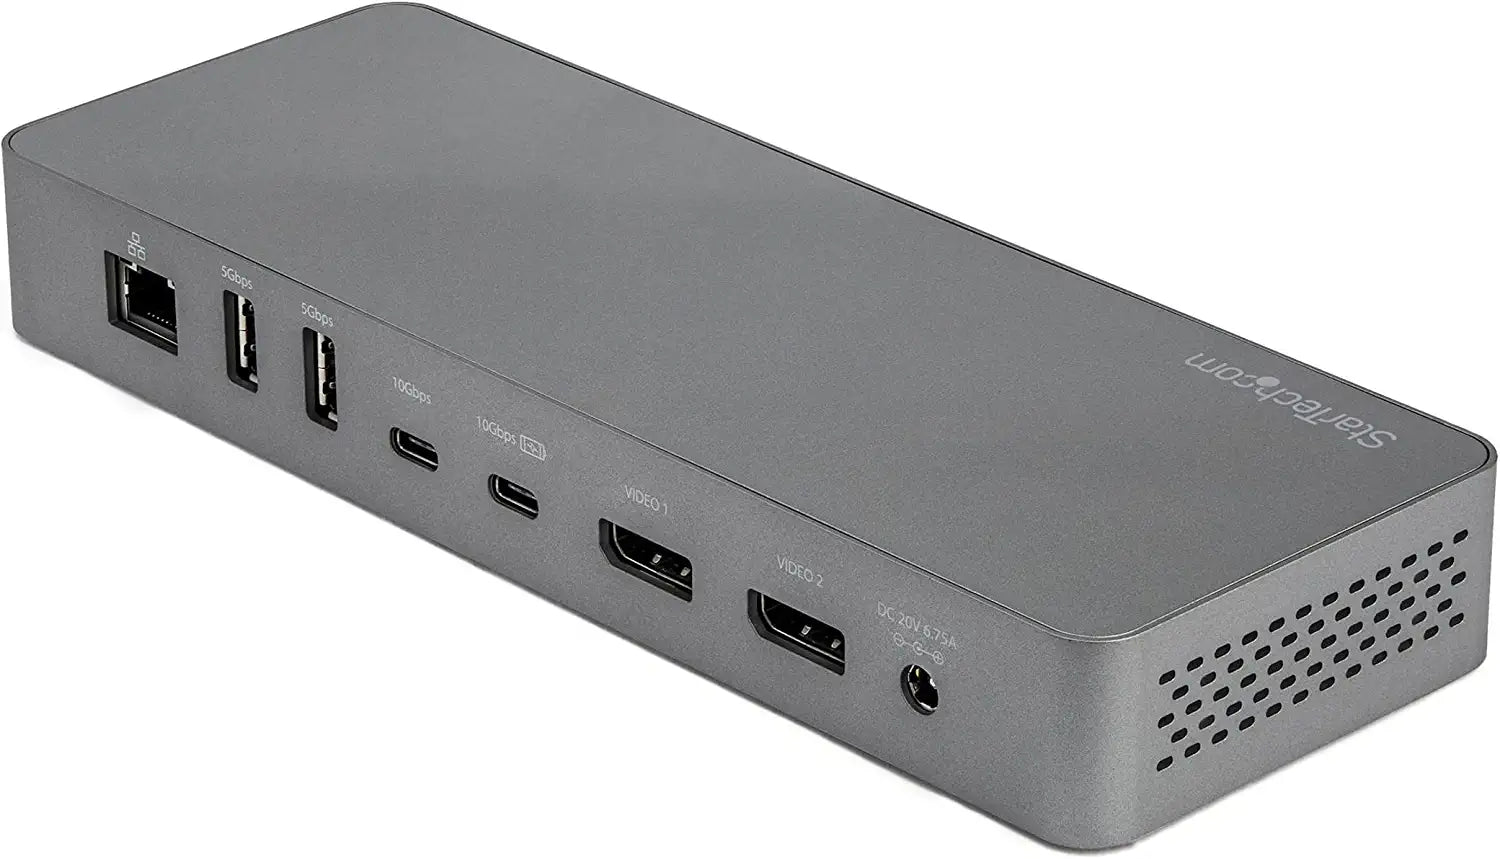 StarTech.com Universal Thunderbolt 3 Dock with USB-C Host Compatibility - Dual Monitor 4K 60Hz DisplayPort TB3 Laptop Docking Station - 60W PD, GbE, 5-Port USB Hub - USB 3.1 Gen 2 10Gbps (TB3CDOCKDP)